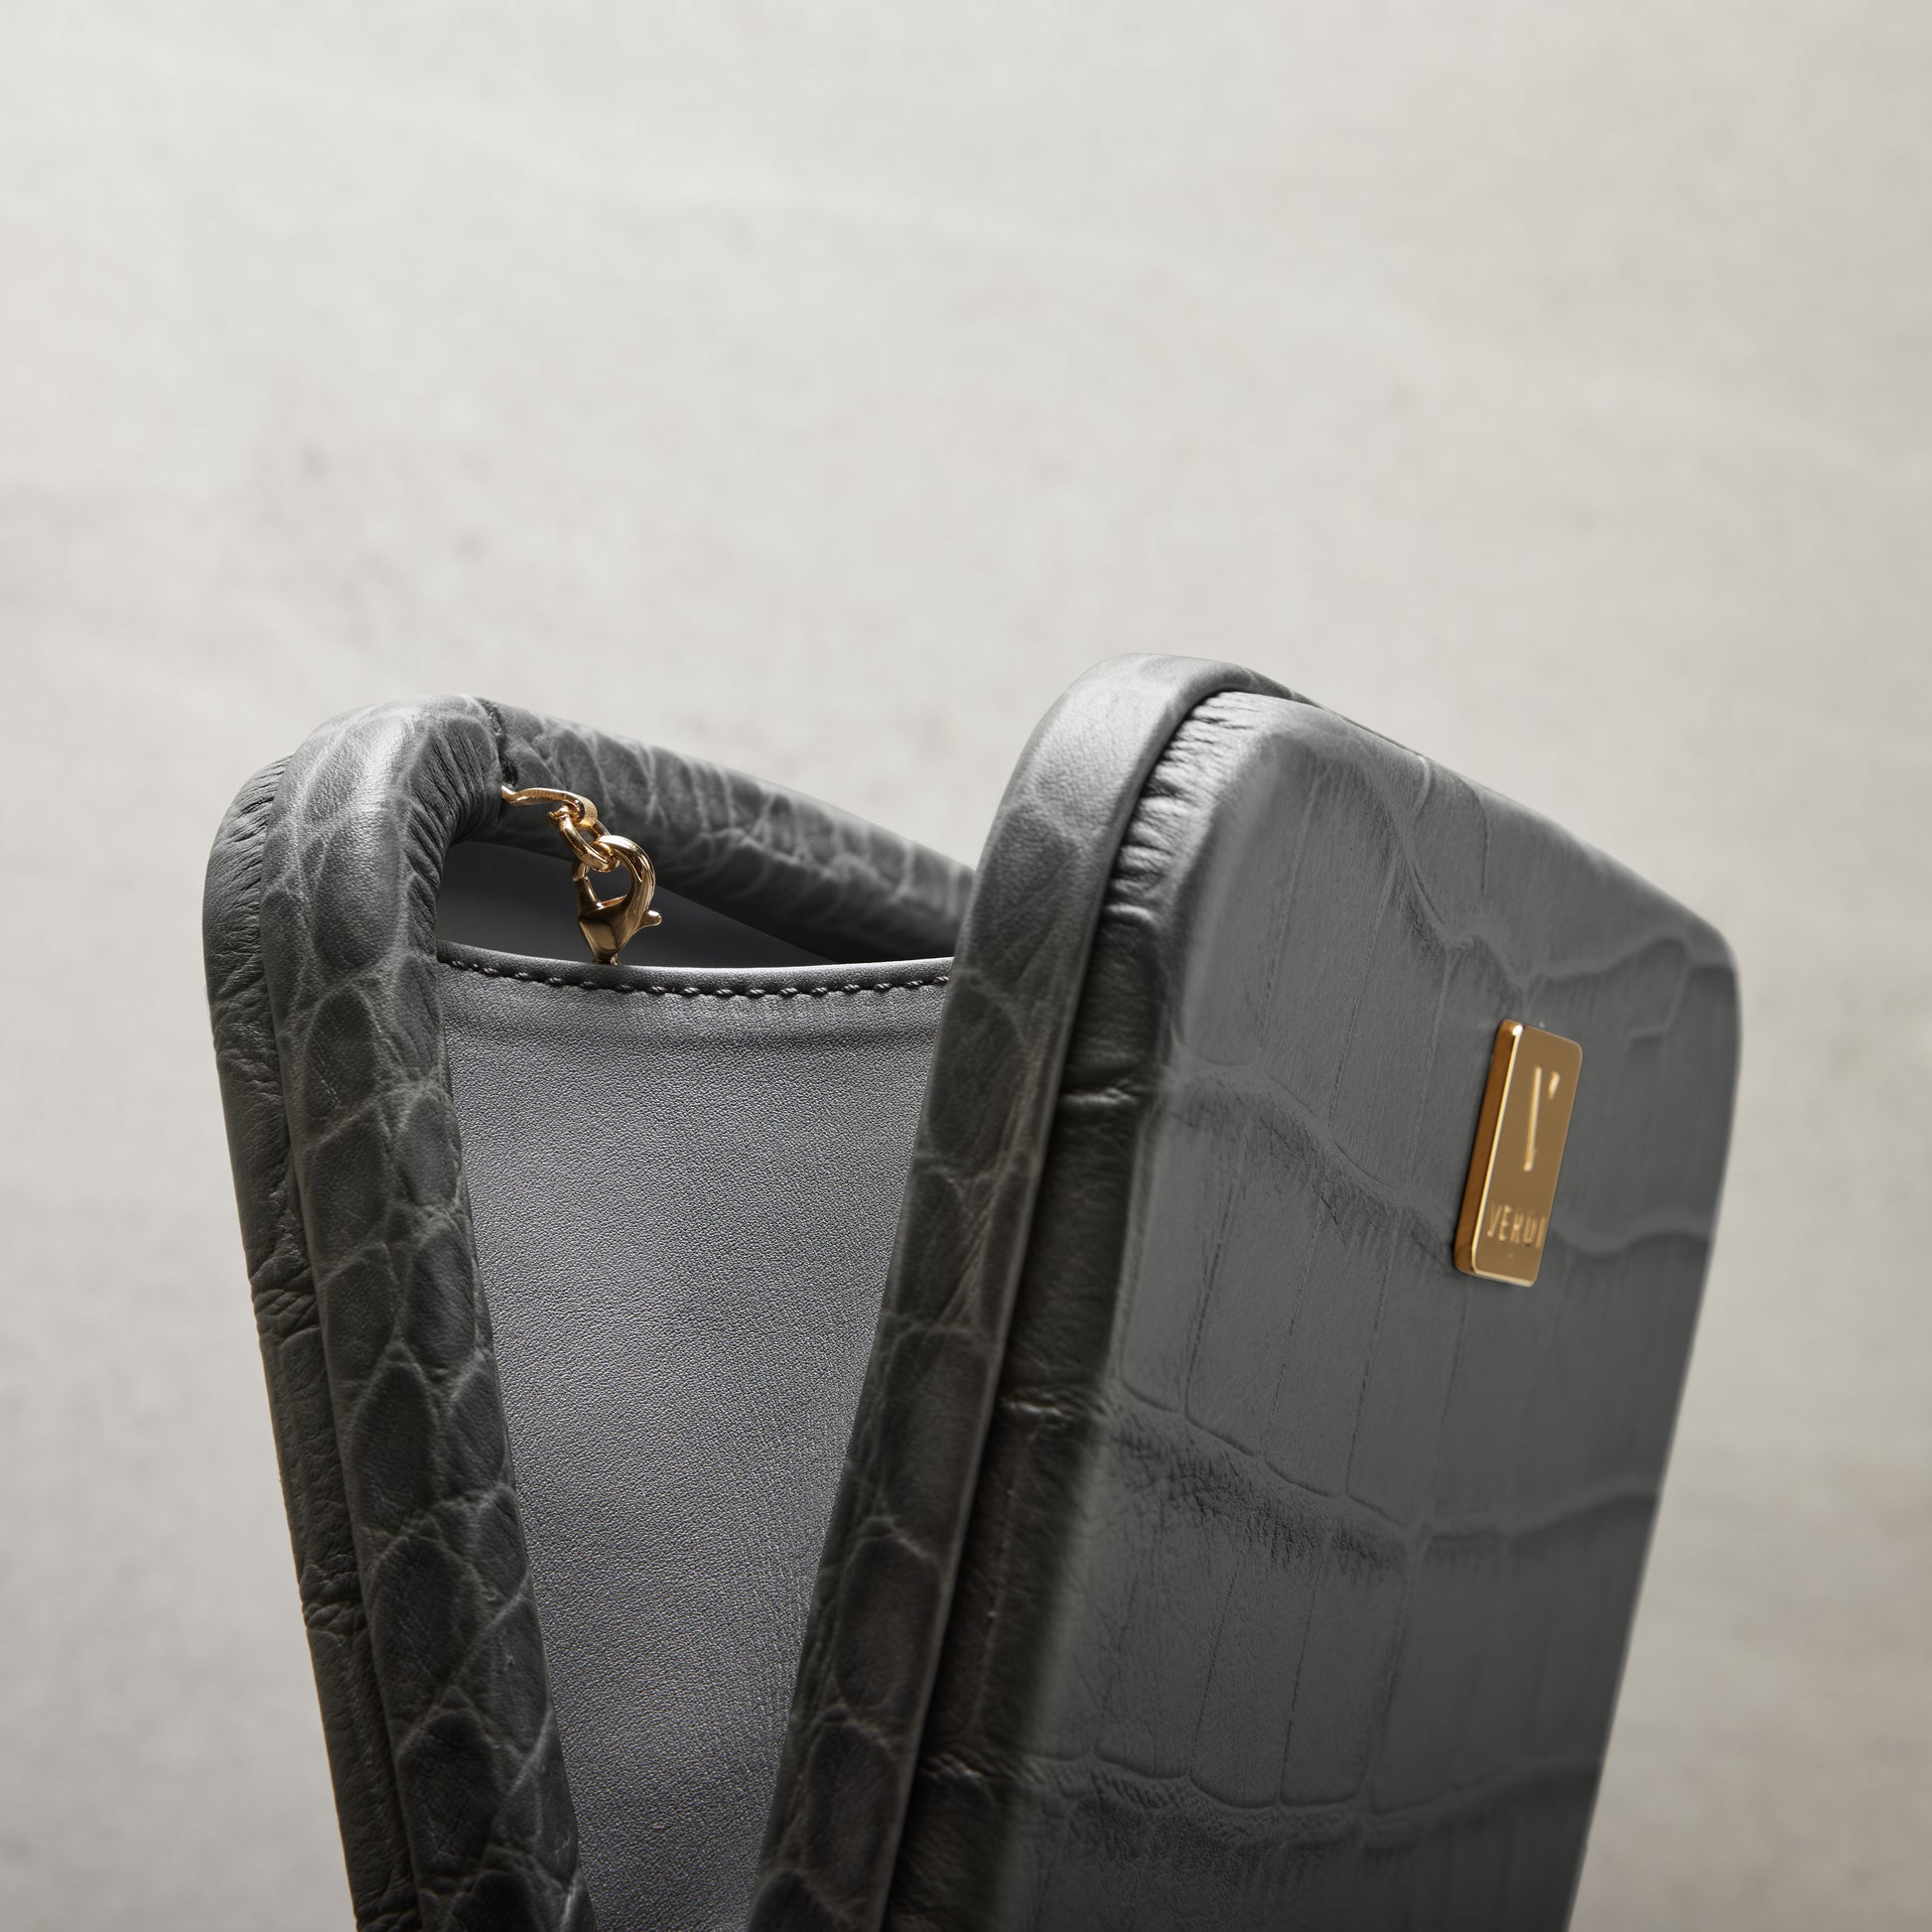 Atelier Verdi Luigia grey crocodile print leather clutch bag, open